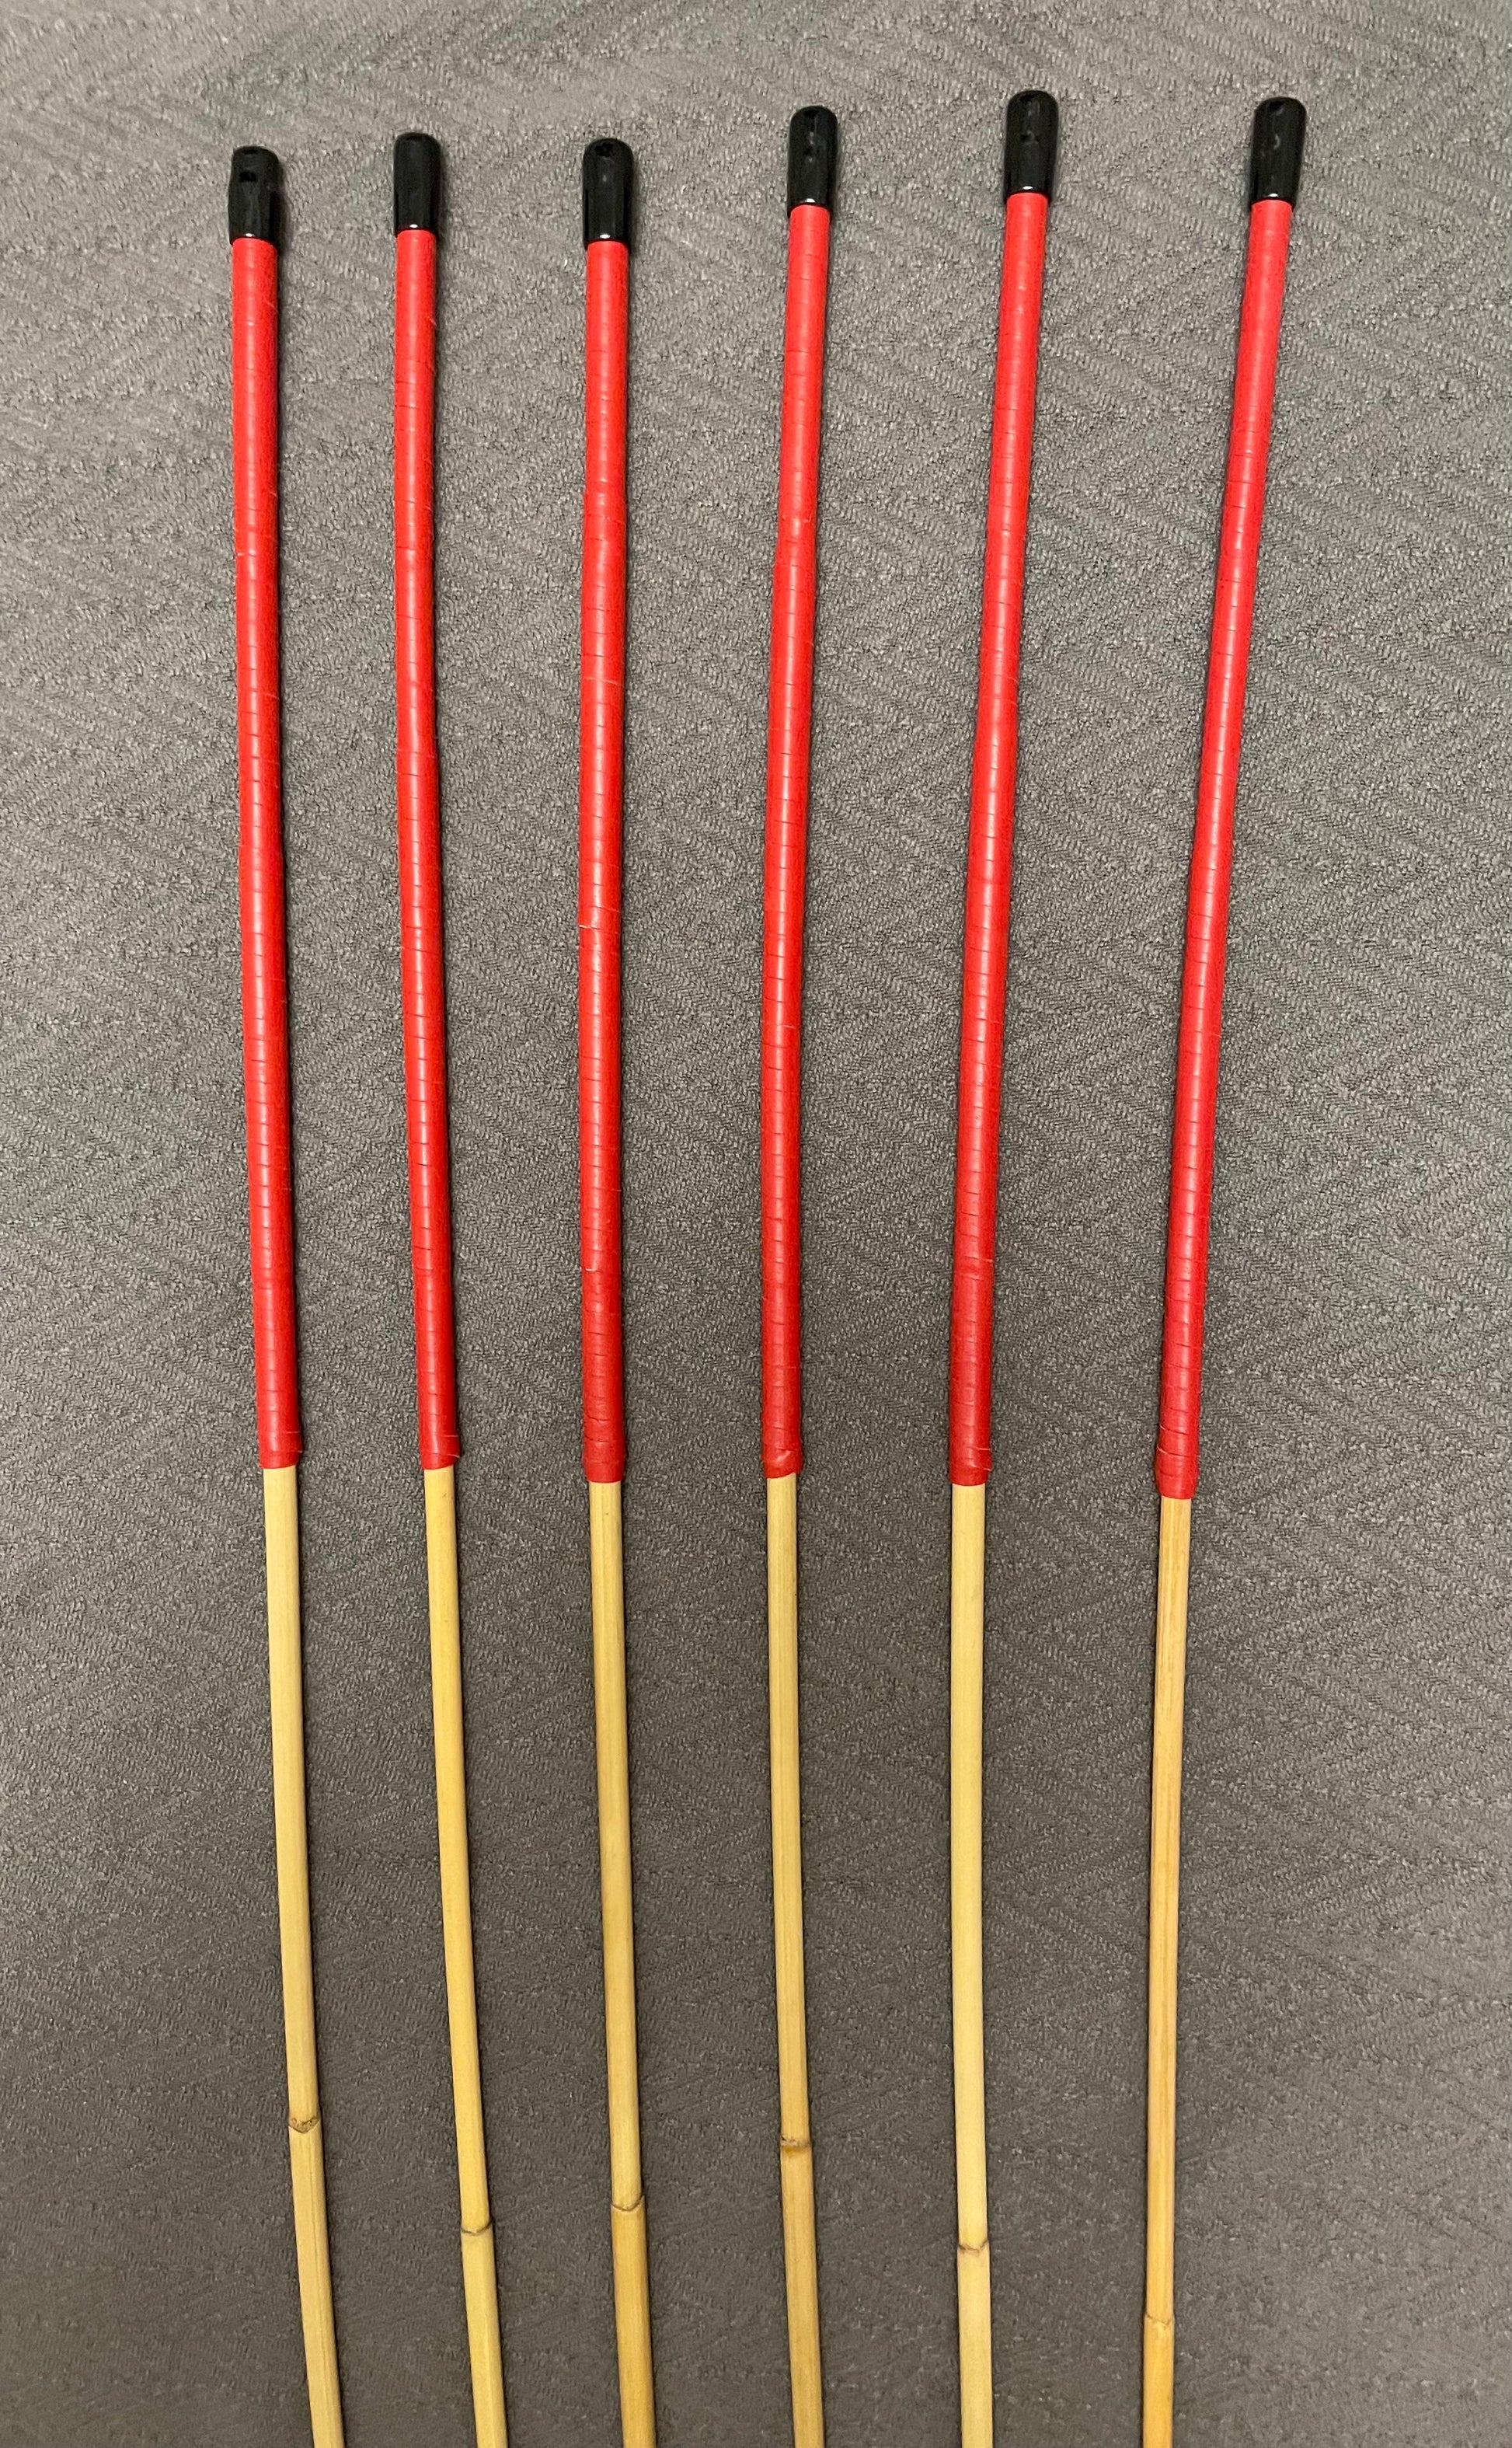 Set of 6 Whippy Swishy Thin Dragon Canes / School Canes / Bastinado Canes with Red Kangaroo Leather Handles - 95 cms Length - Coated Finish